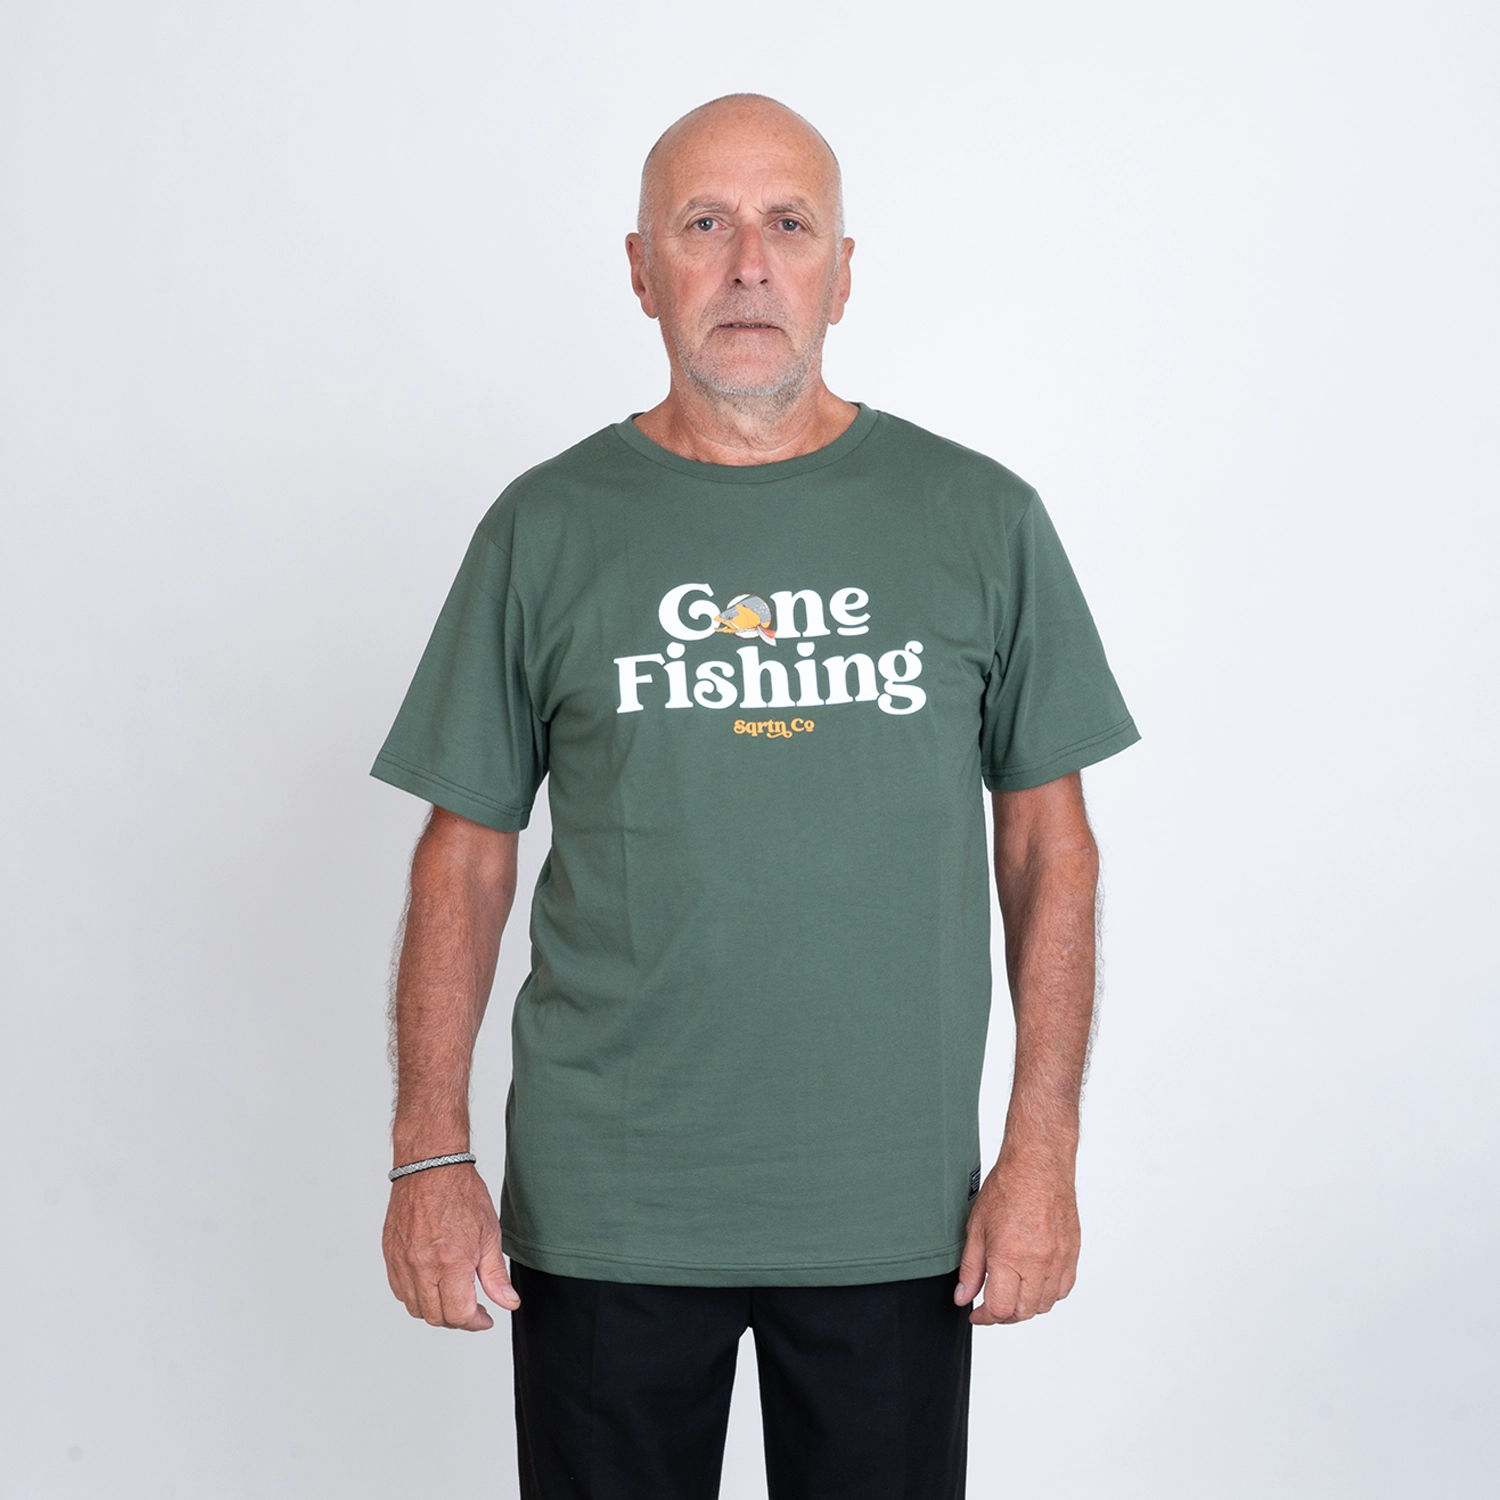 Gone Fish T-shirt